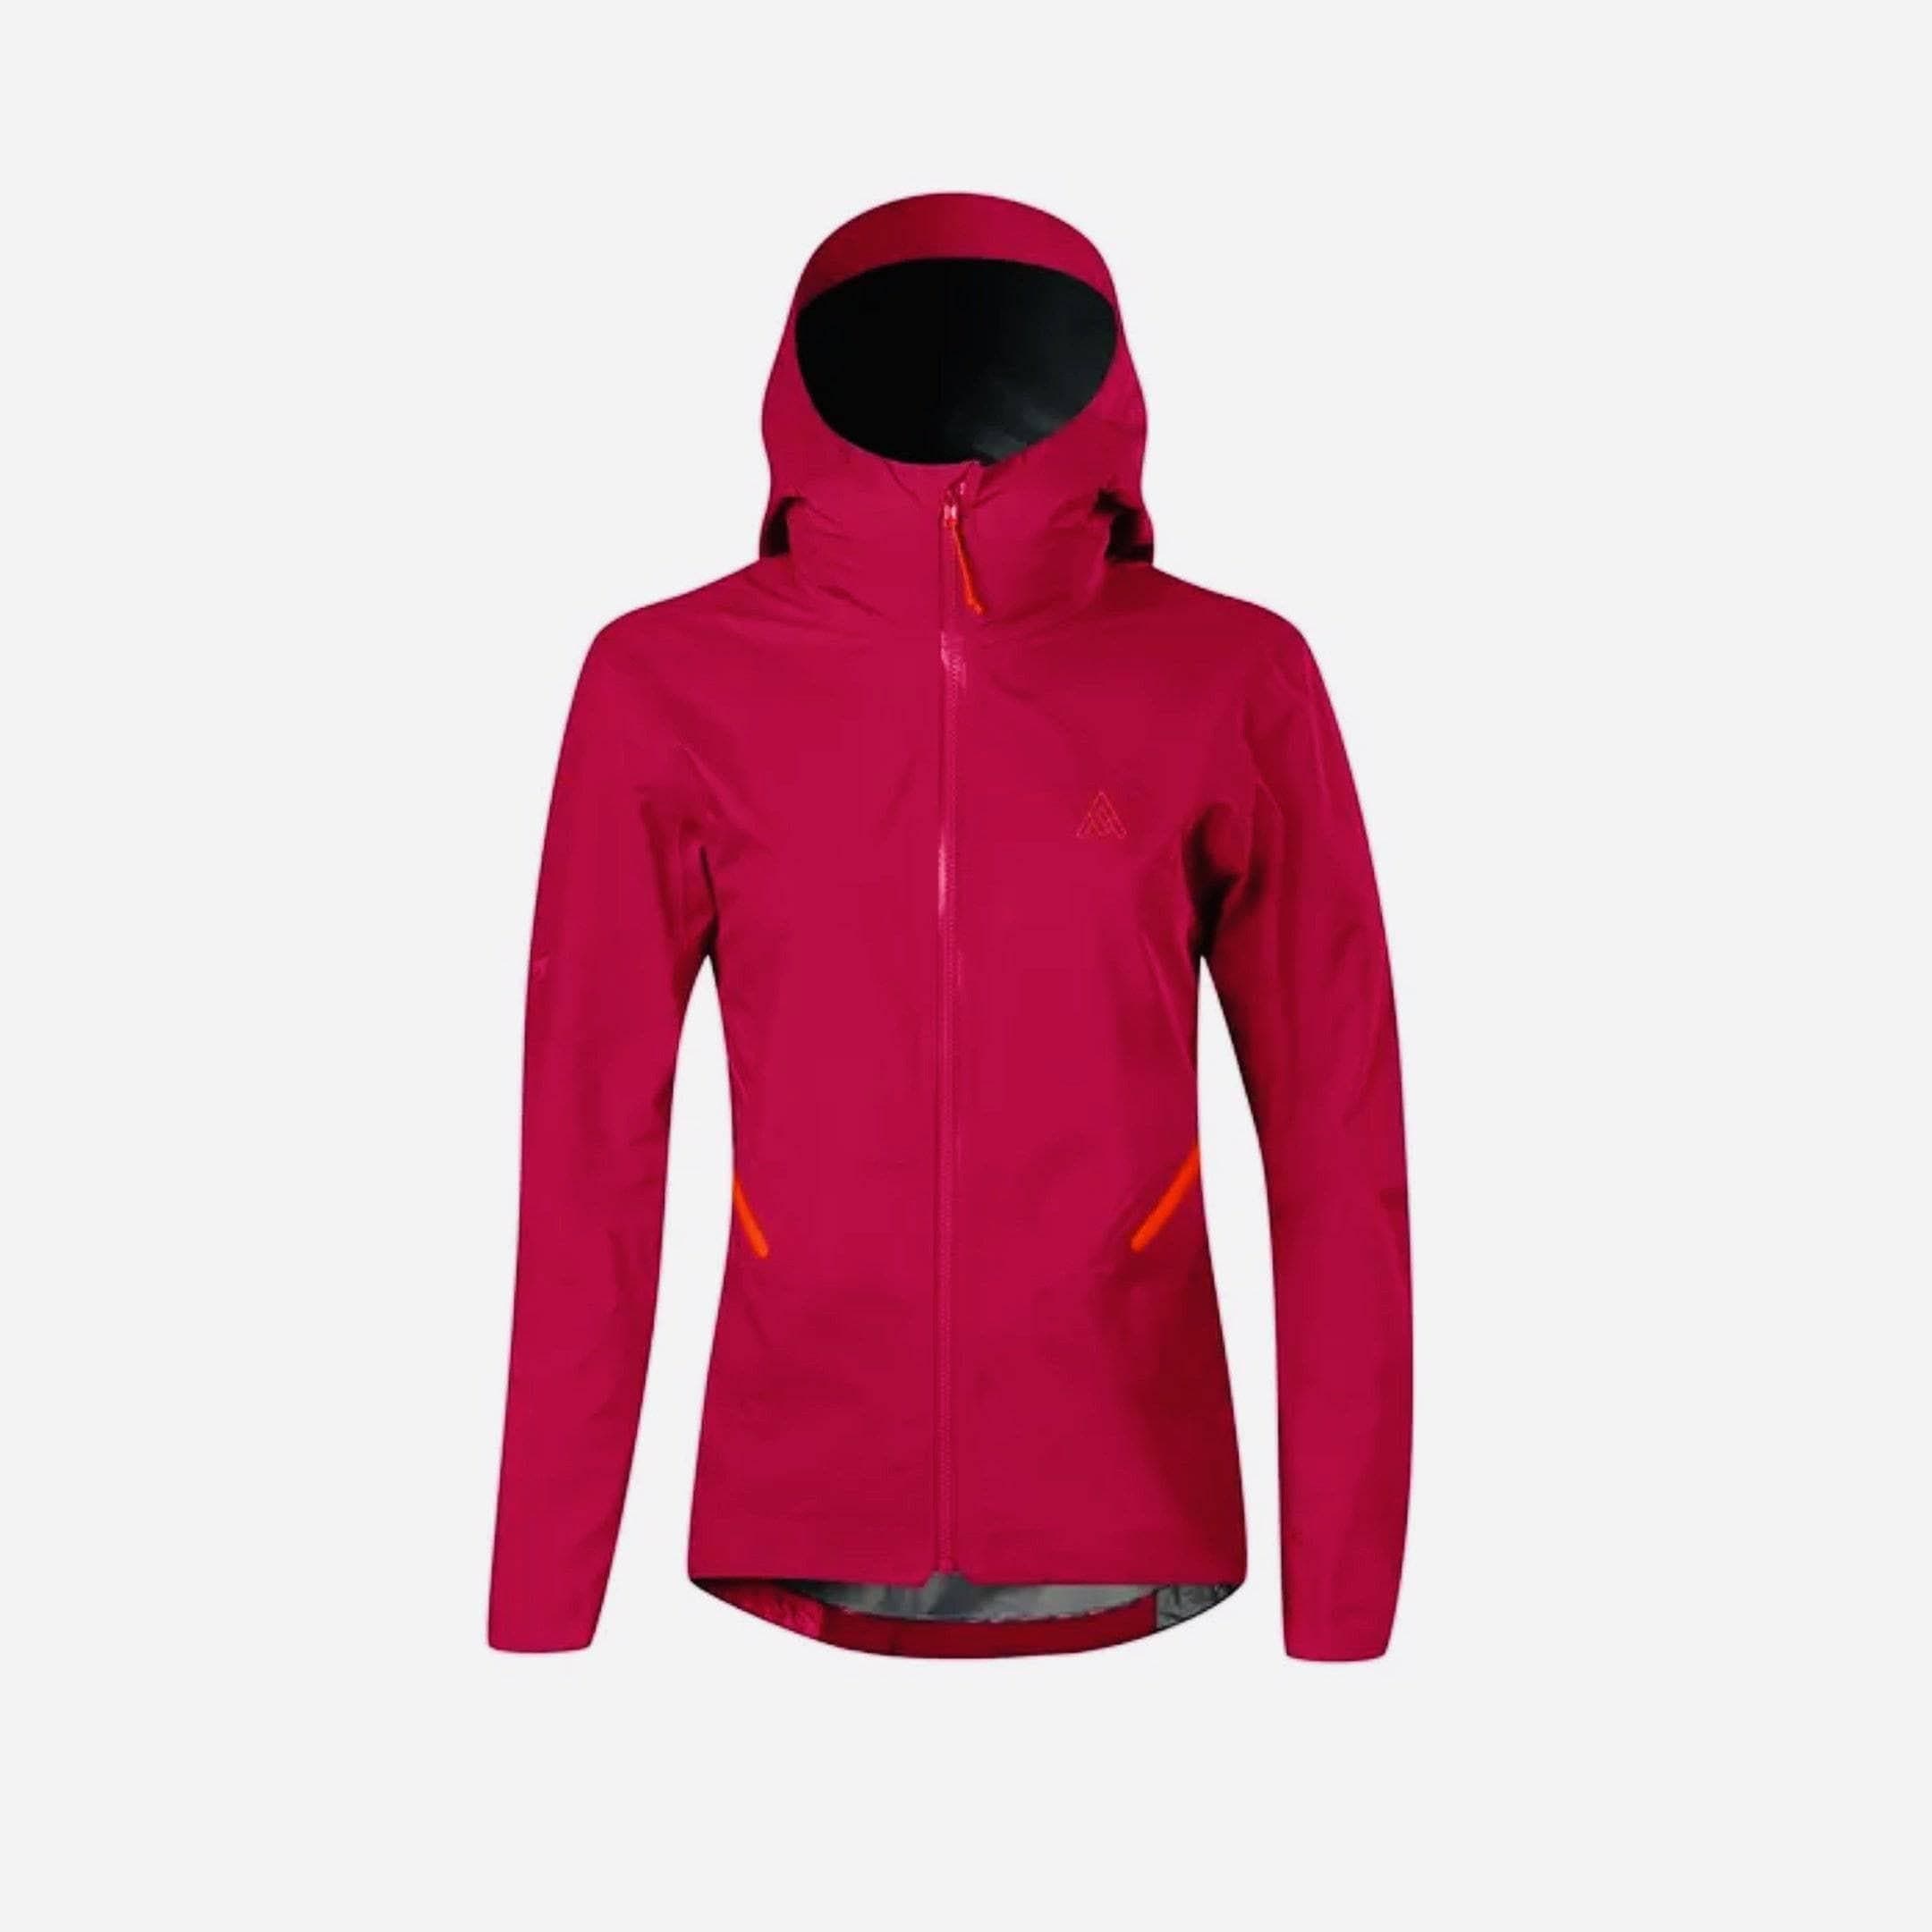 7mesh Women's Guardian Jacket Beetbox / XS Apparel - Clothing - Women's Jackets - Mountain